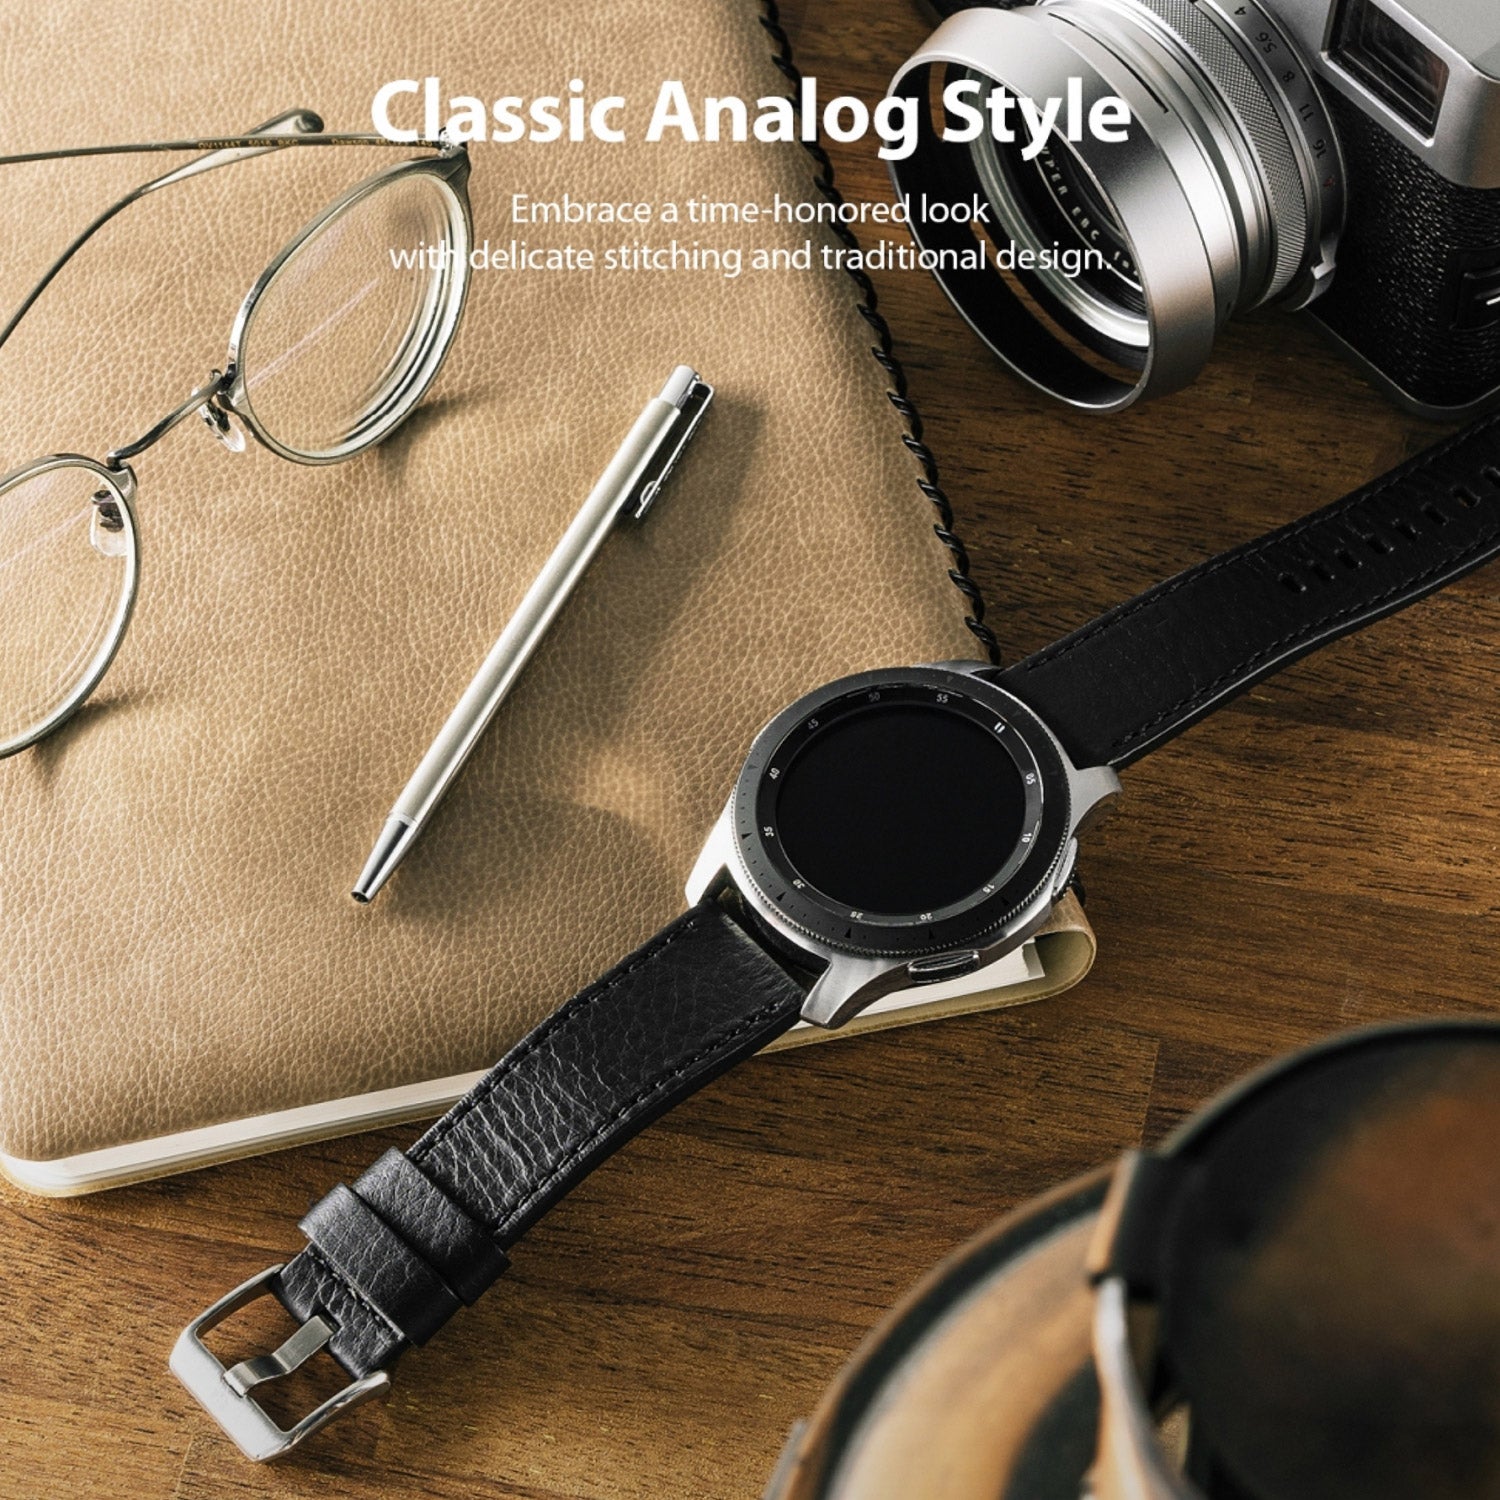 Ringke Galaxy Watch 3 41mm Watch Lug 20mm Leather One Classic Band Black